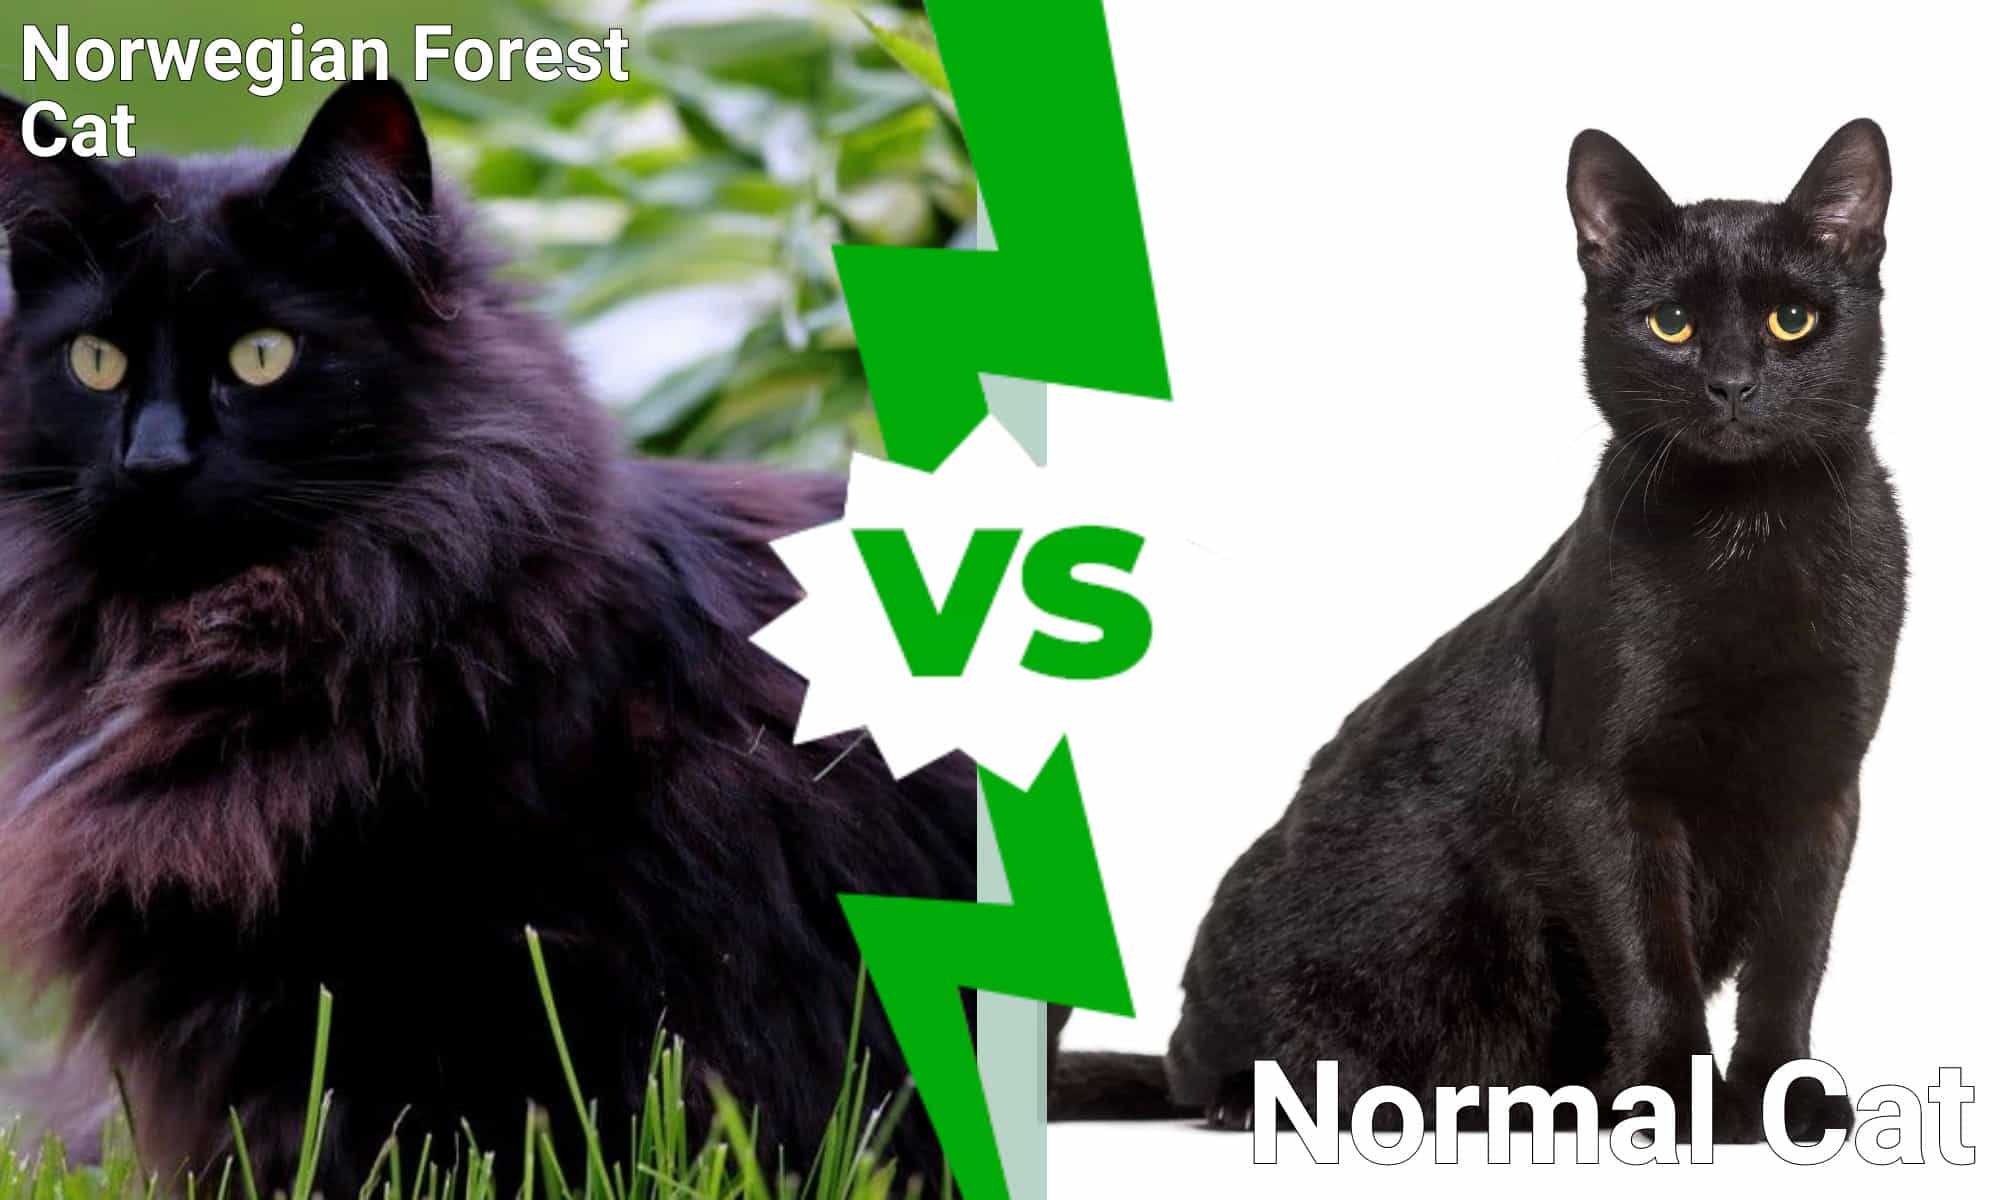 black smoke norwegian forest cat